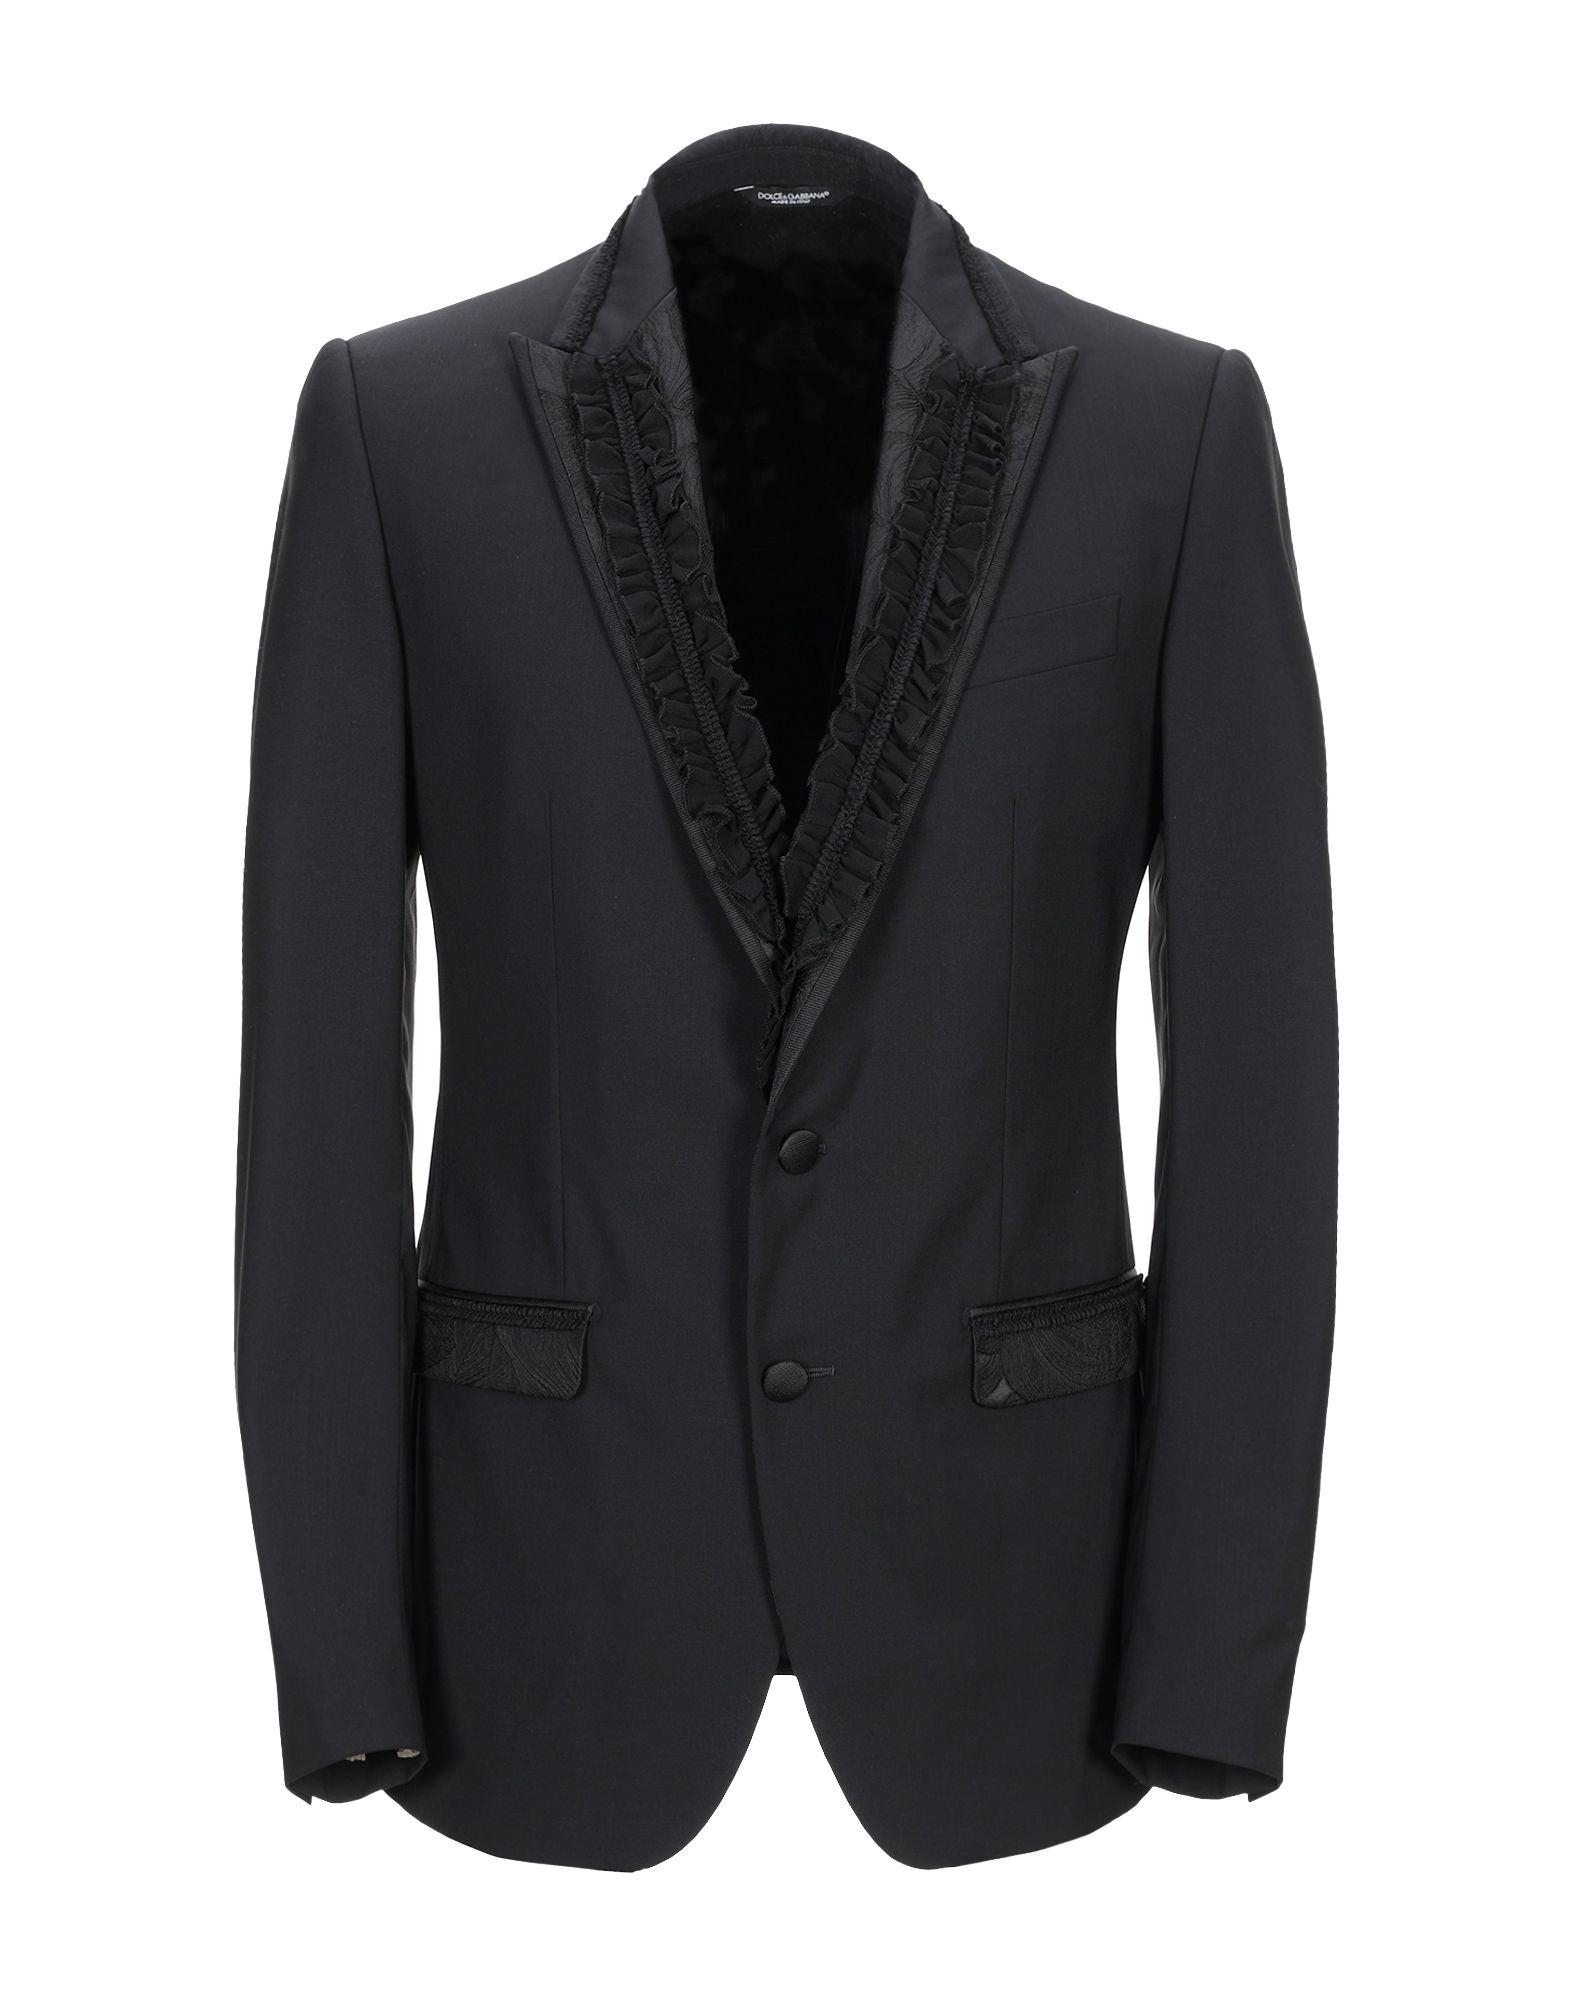 Dolce & Gabbana Blazer in Black for Men - Lyst